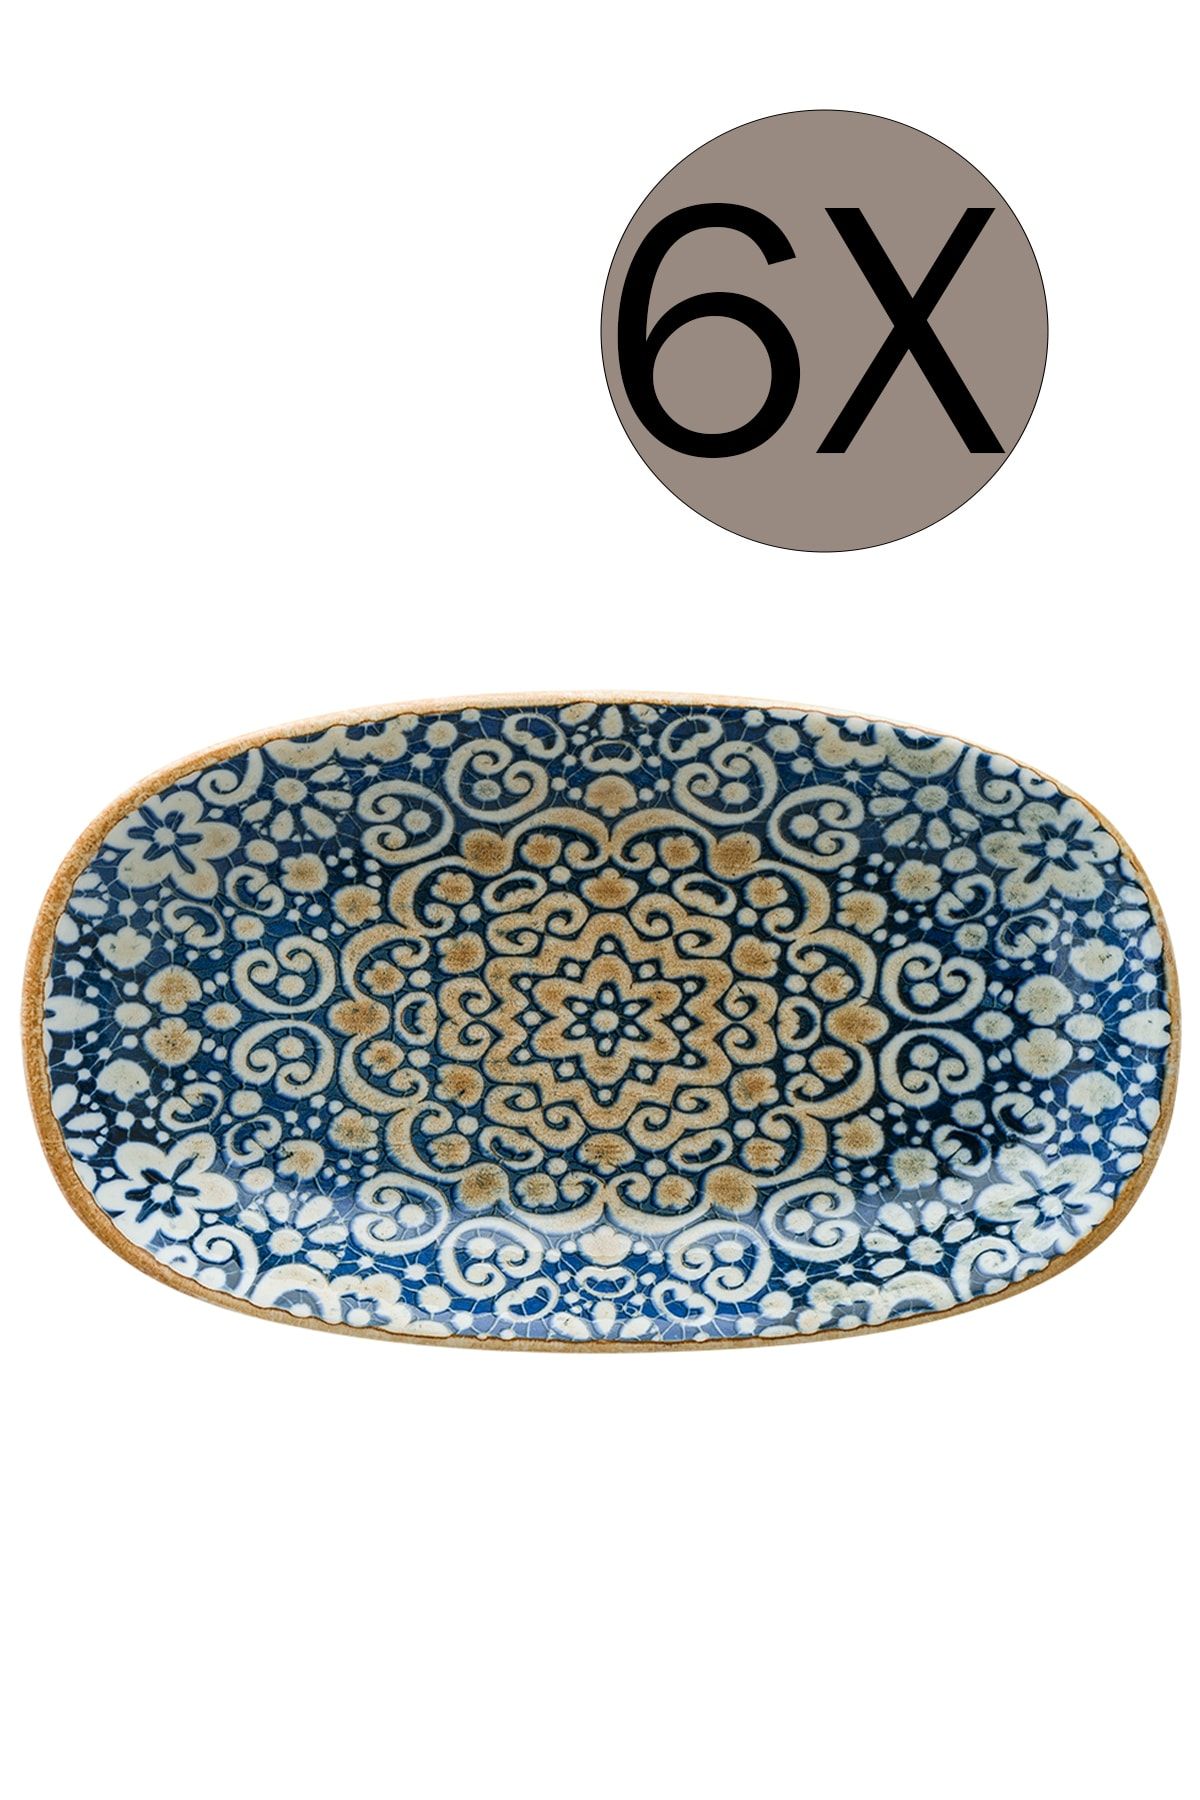 Bonna Porselen Alhambra Gourmet Oval Kayık Tabak 15x8.5 Cm Alhgrm15oky 6'lı Takım